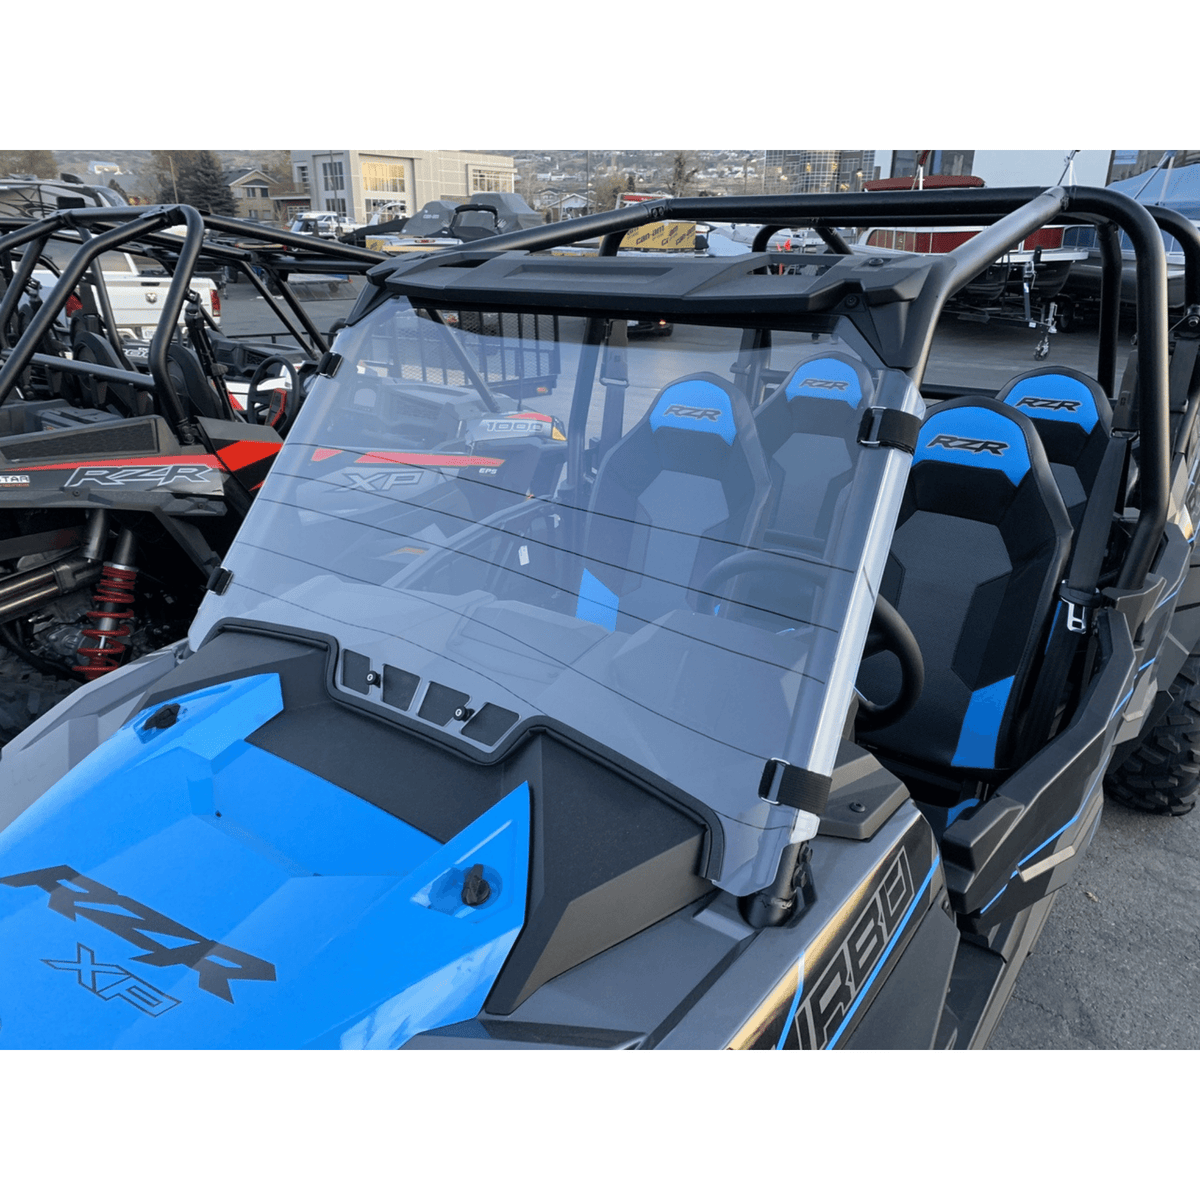 Polaris RZR 1000, Turbo Vented Full Polycarbonate Windshield (2019+)